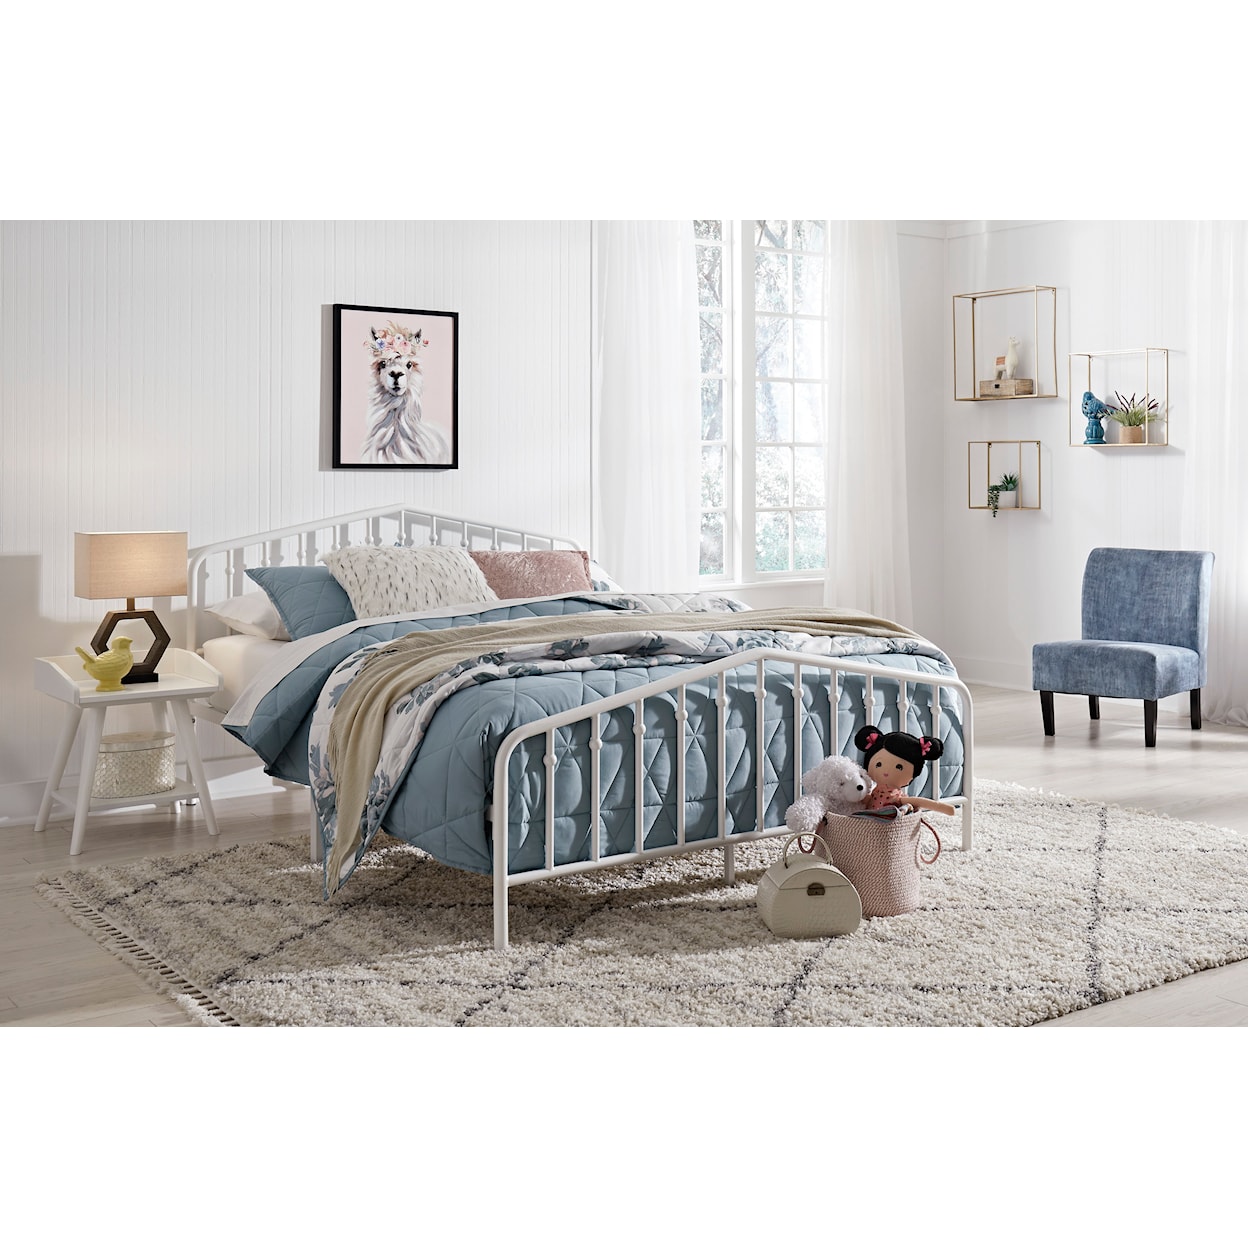 Ashley Furniture Signature Design Trentlore Queen Metal Bed